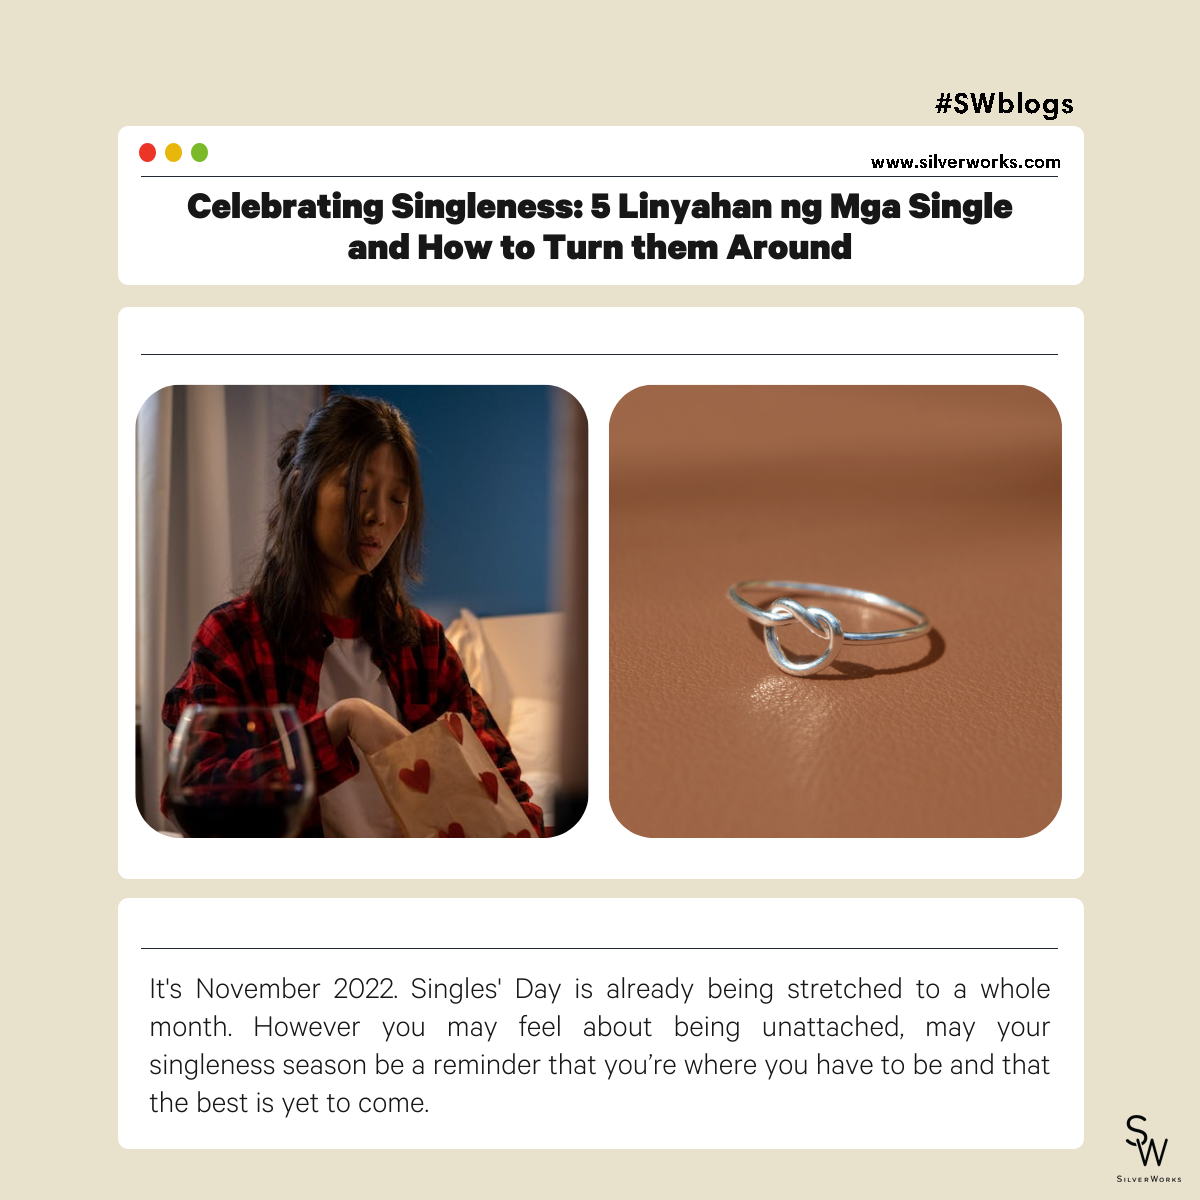 Celebrating Singleness: 5 Linyahan ng Mga Single and How to Turn them Around